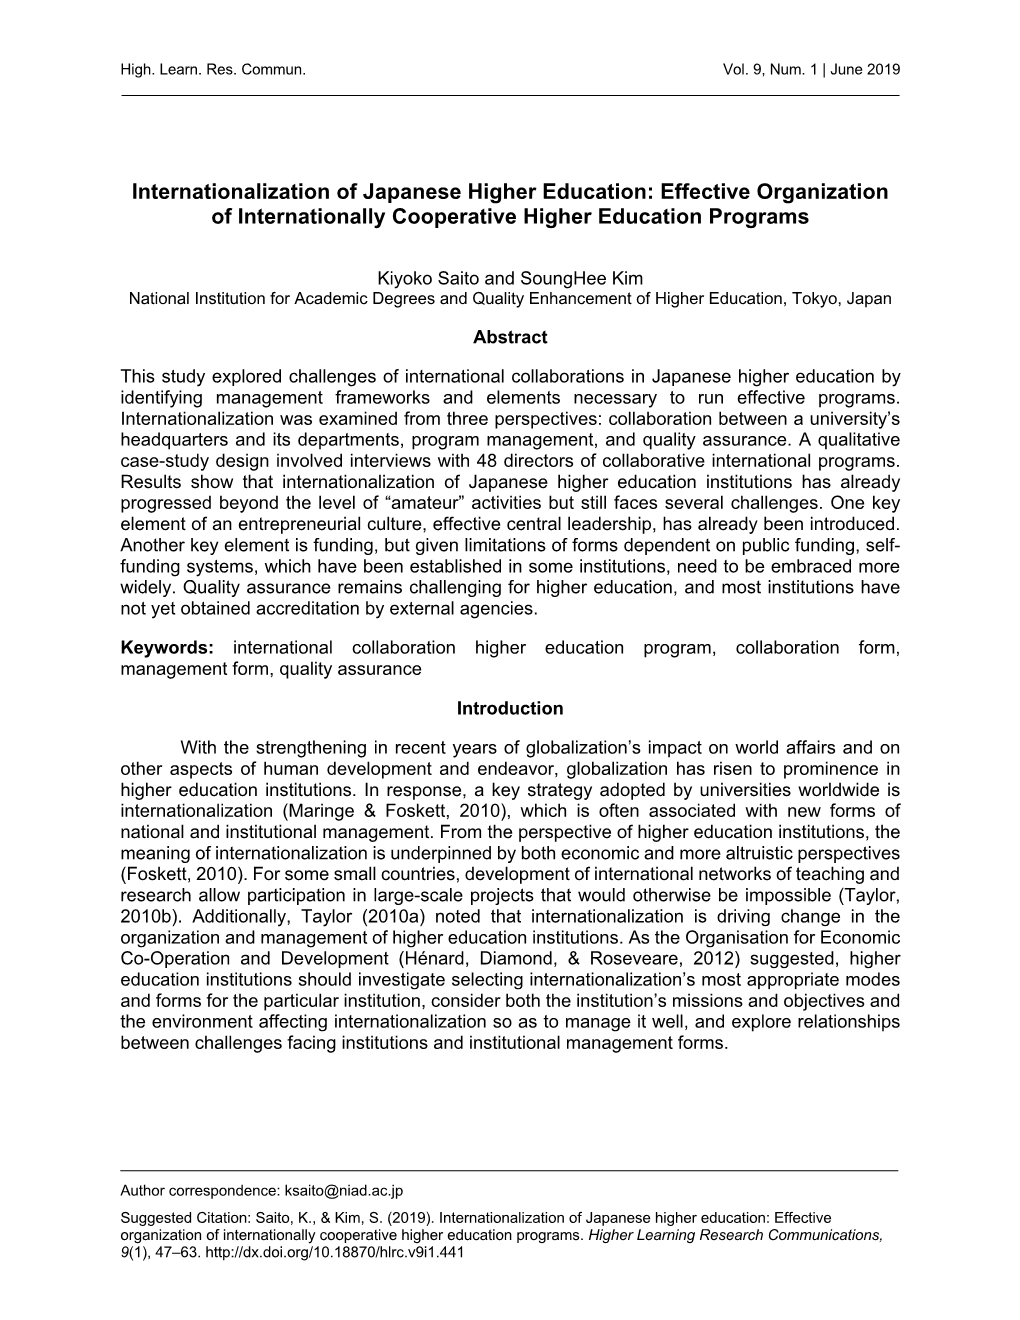 Internationalization of Japanese Higher Education: Effective Organization of Internationally Cooperative Higher Education Programs